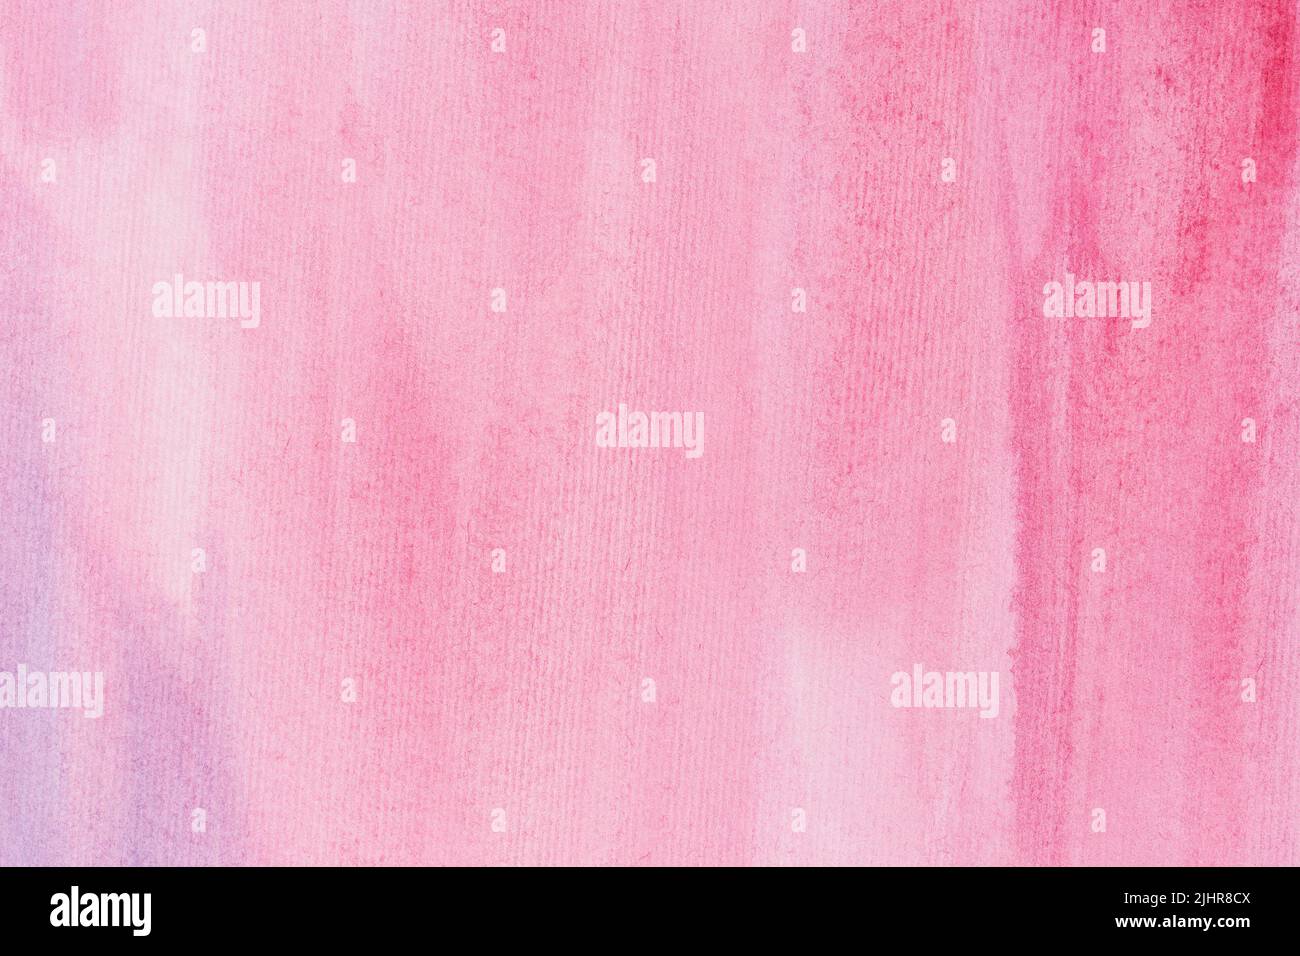 textura de fondo de papel acuarela pintada de rosa y lila Foto de stock